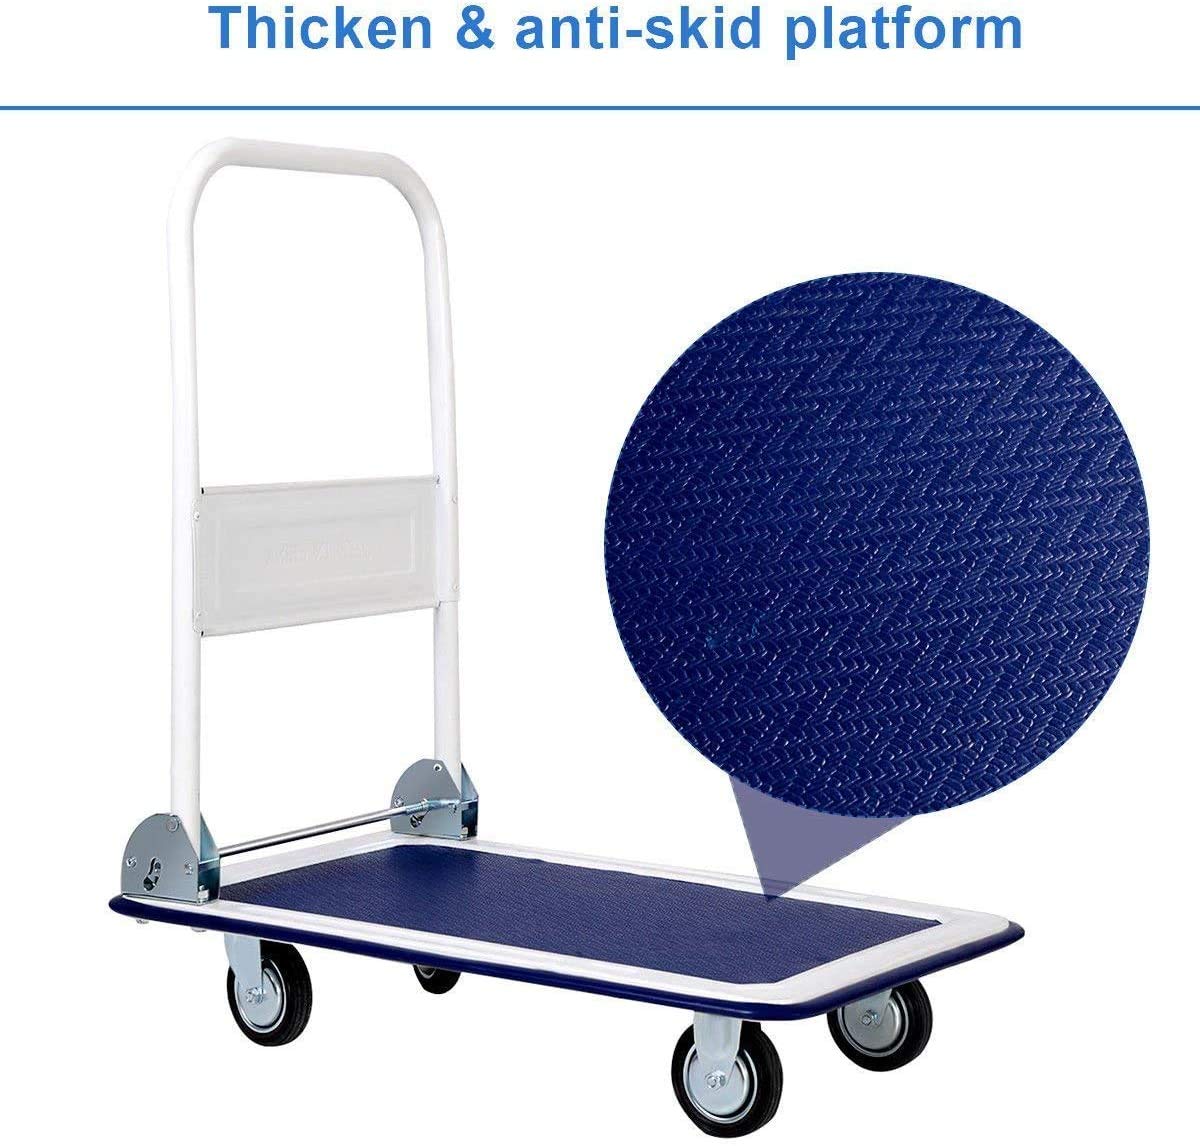 10 Platform Cart Dolly - Giantex